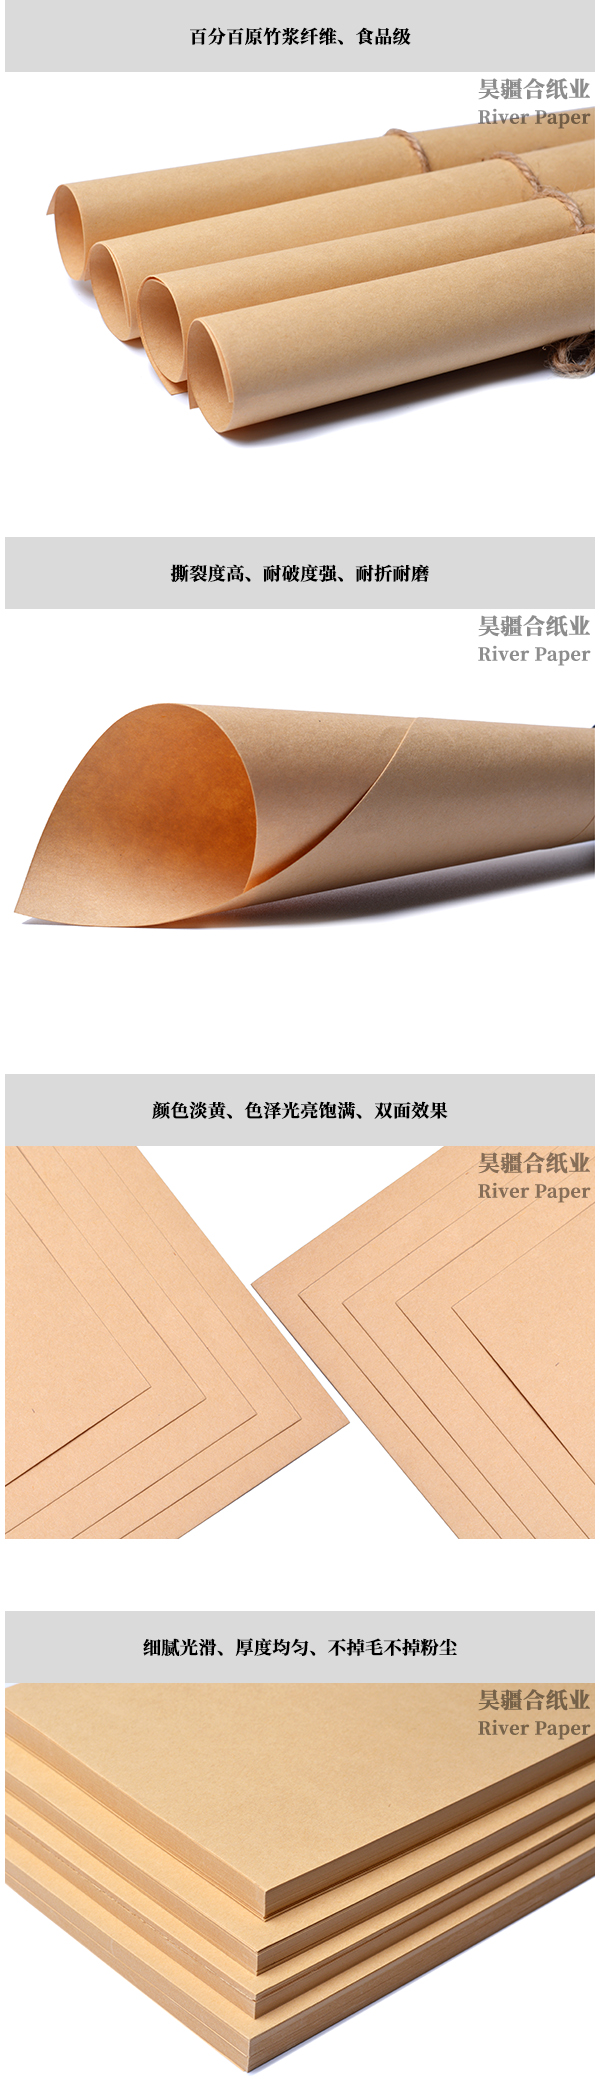 Domestic refined kraft paper 60-250g